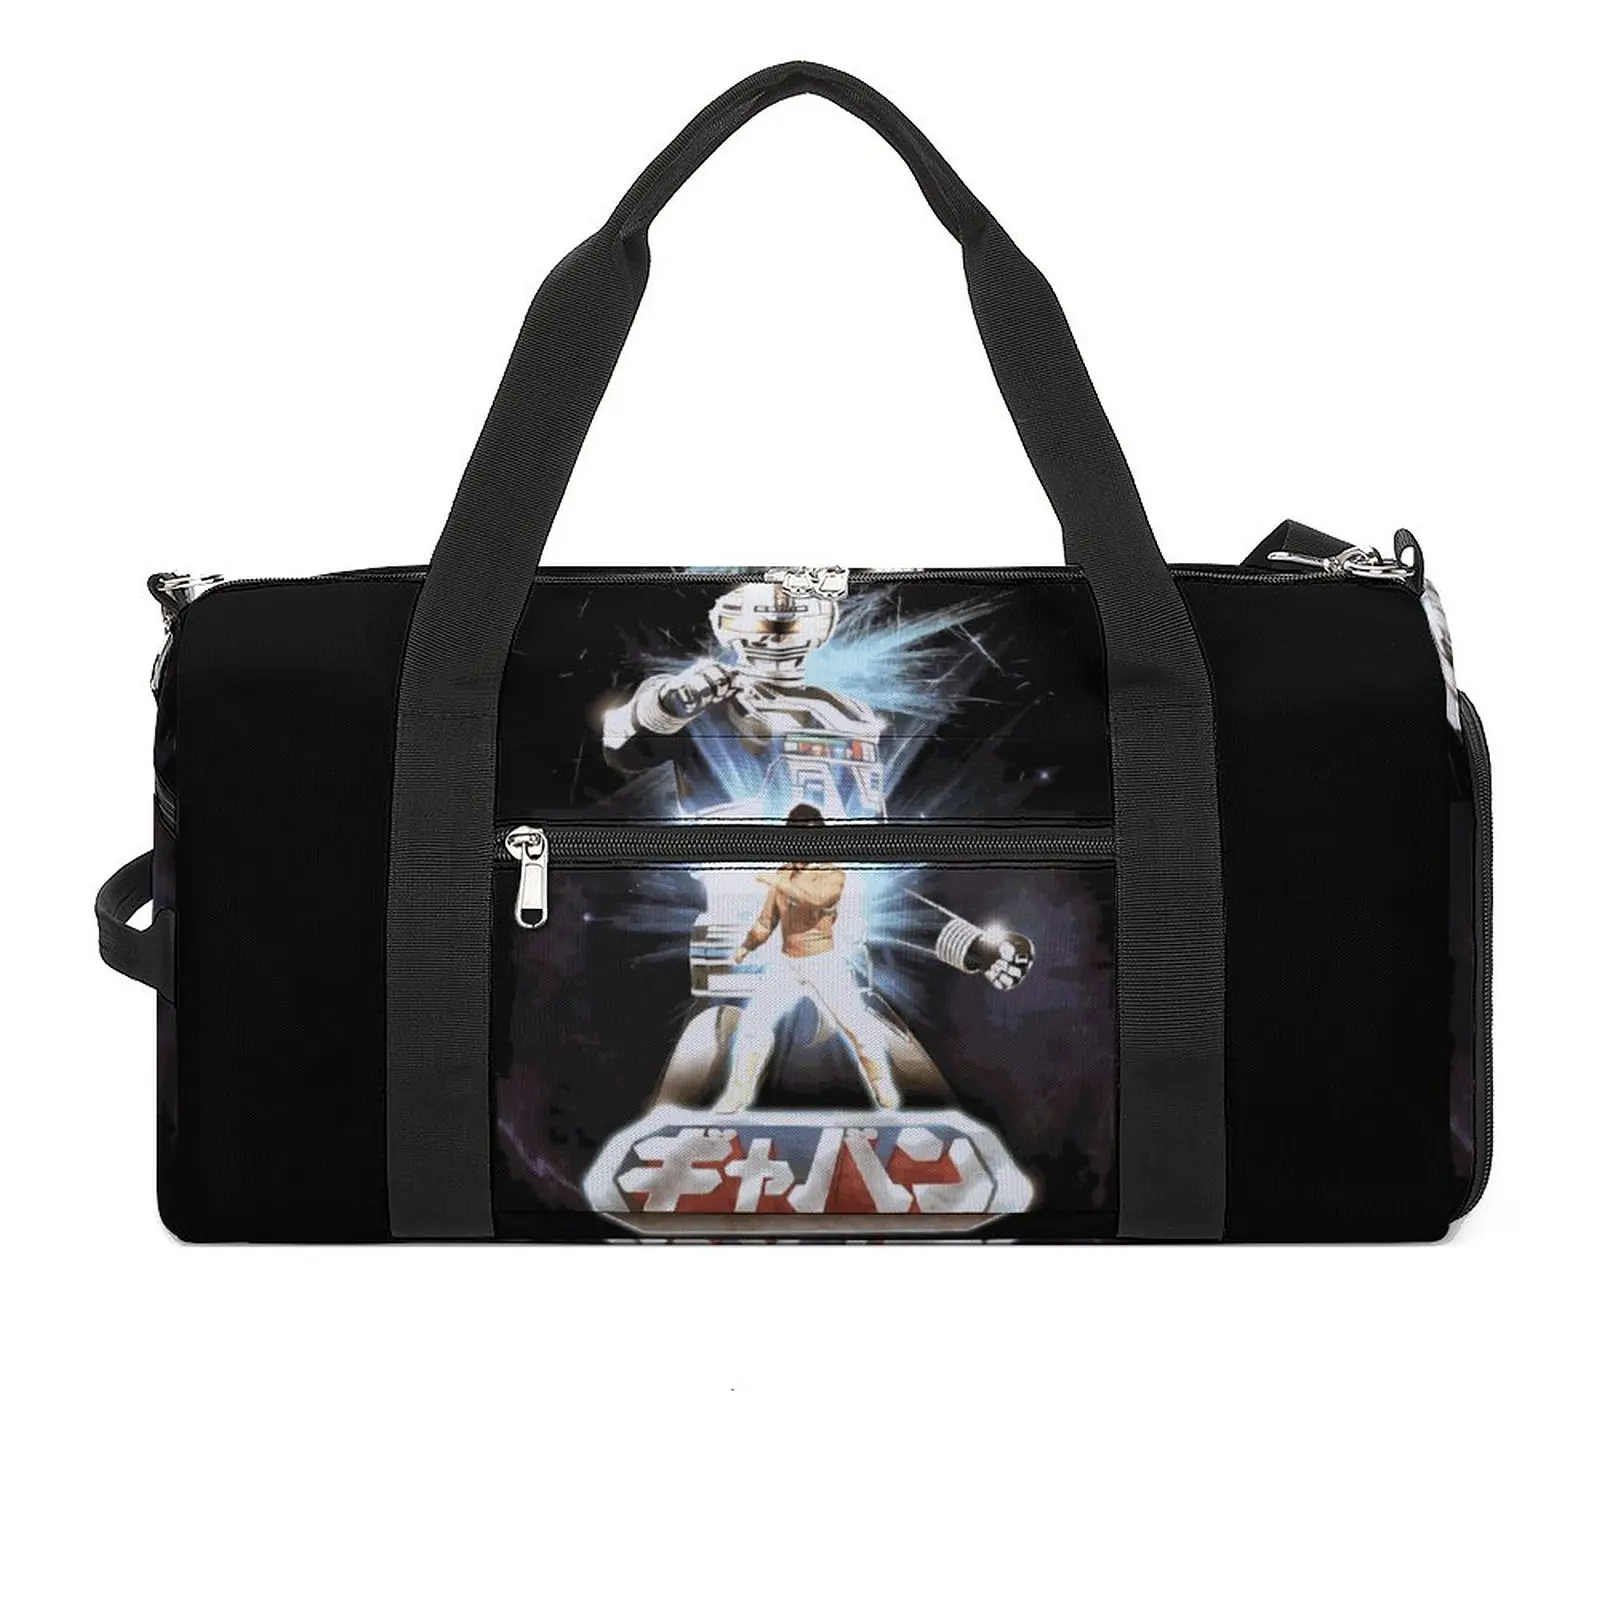 

Gavan Gym Bag Space Sheriff Gavan Training Sports Bags Couple Printed with Shoes Retro Fitness Bag Outdoor Handbags